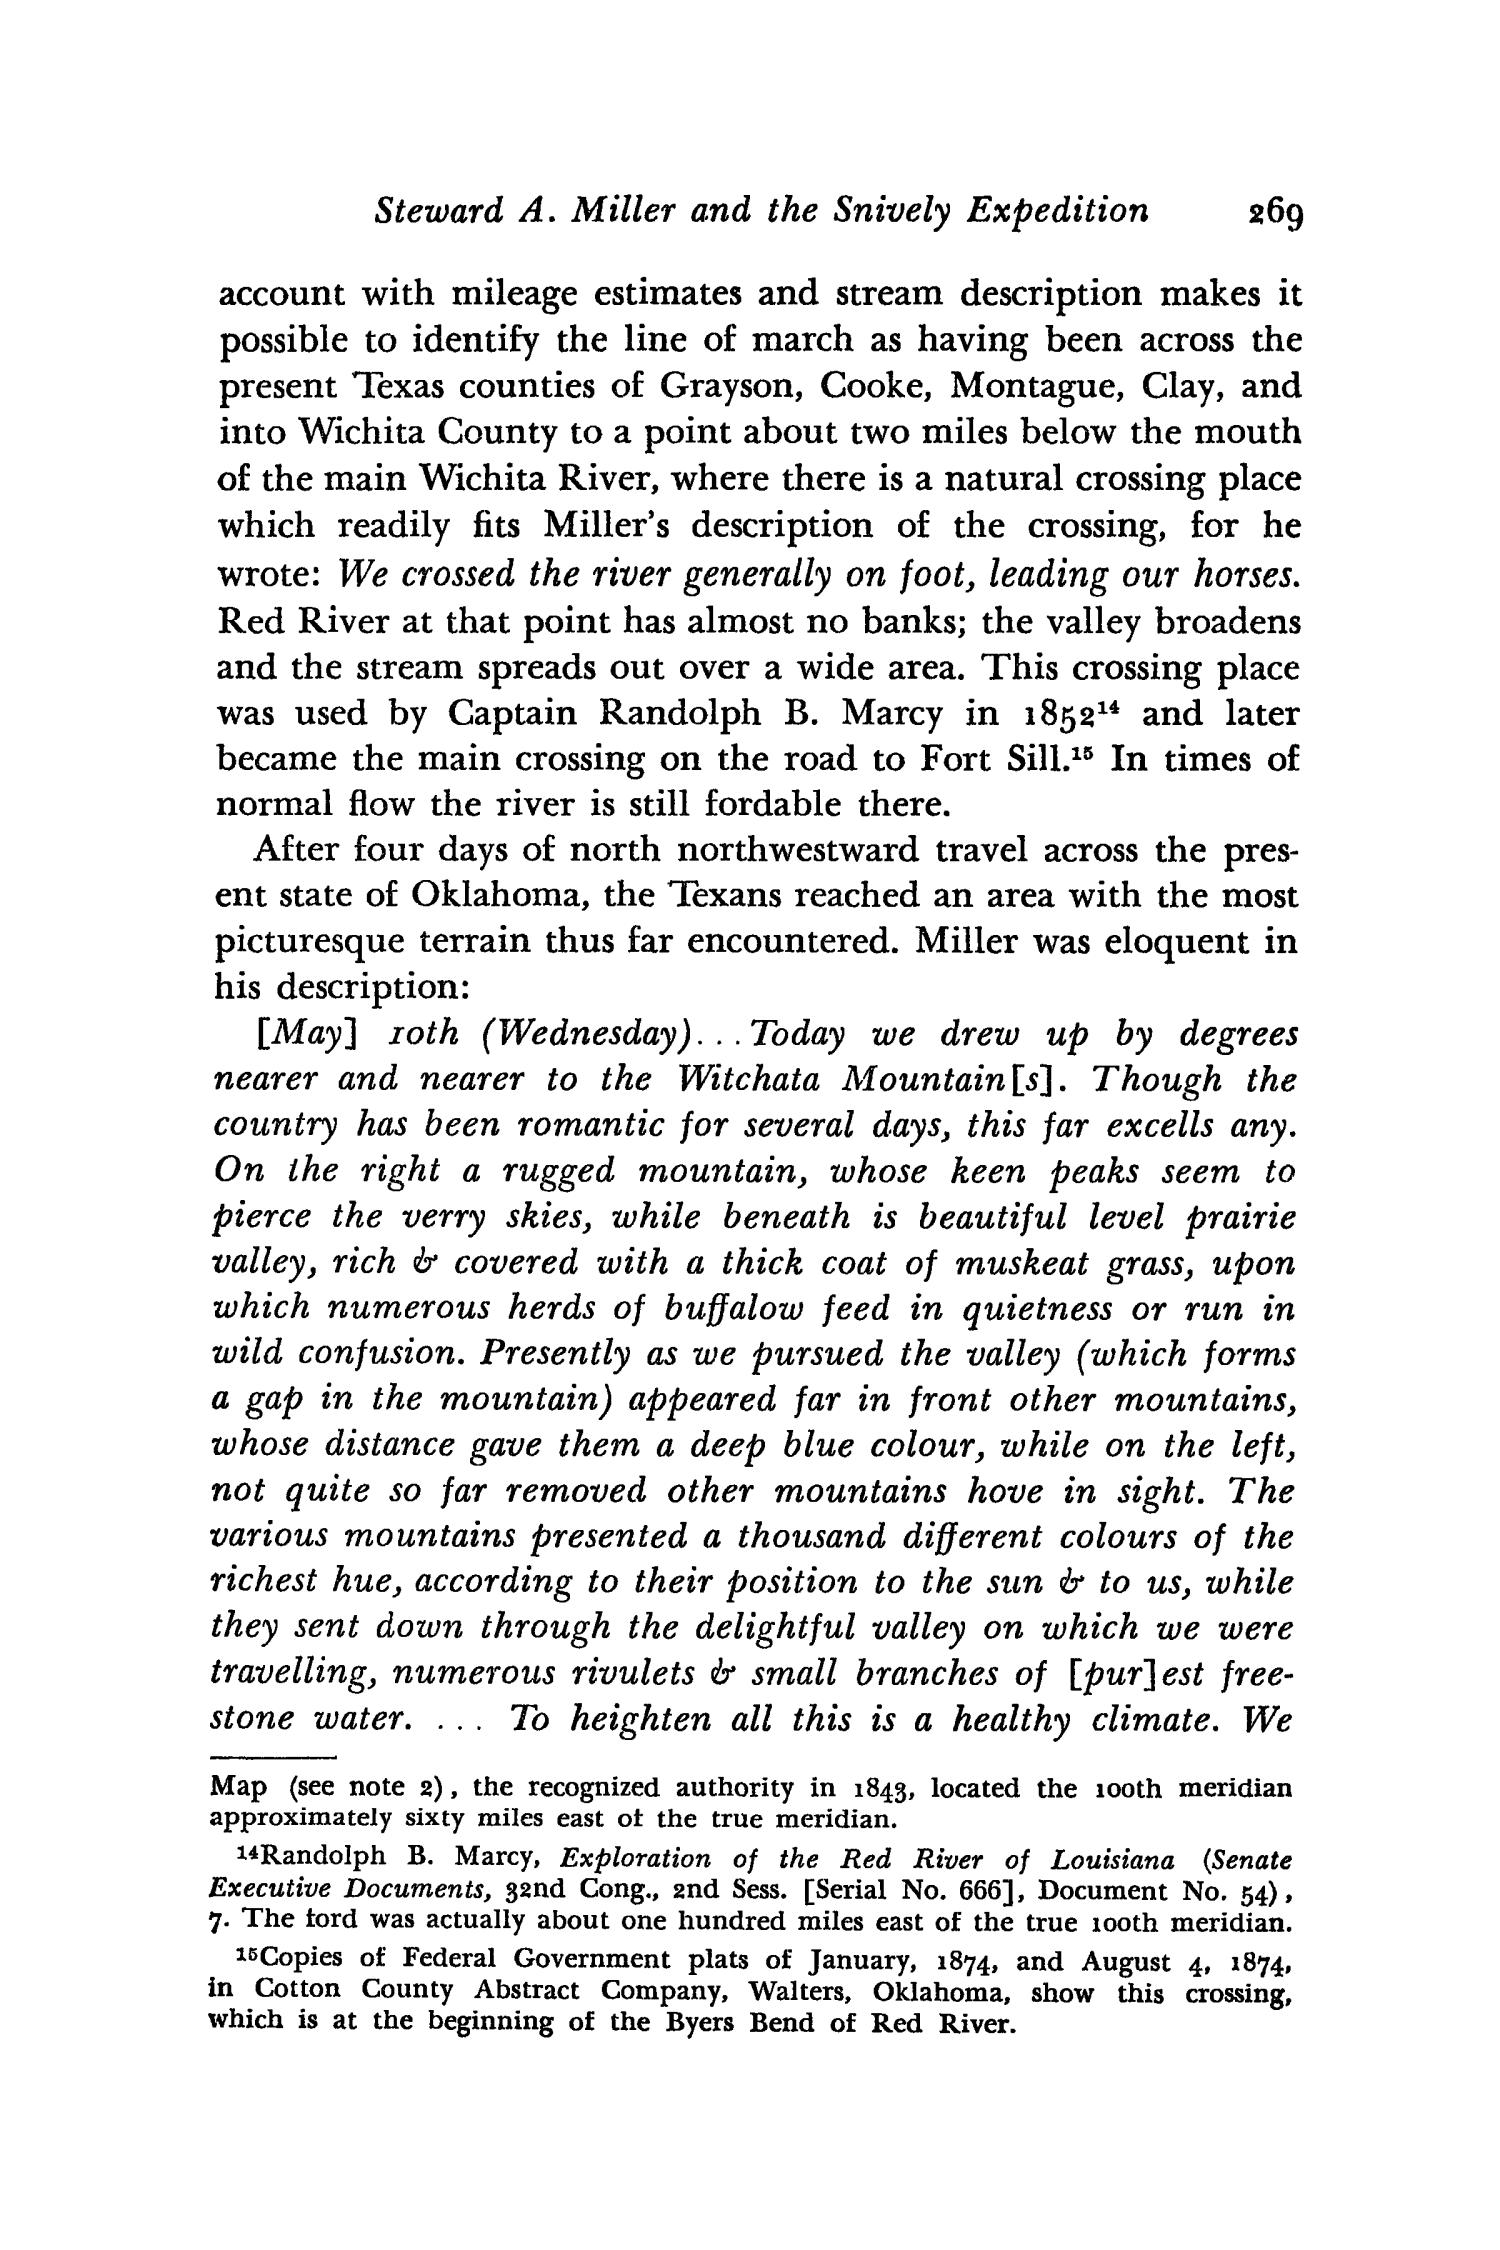 The Southwestern Historical Quarterly, Volume 54, July 1950 - April, 1951
                                                
                                                    269
                                                